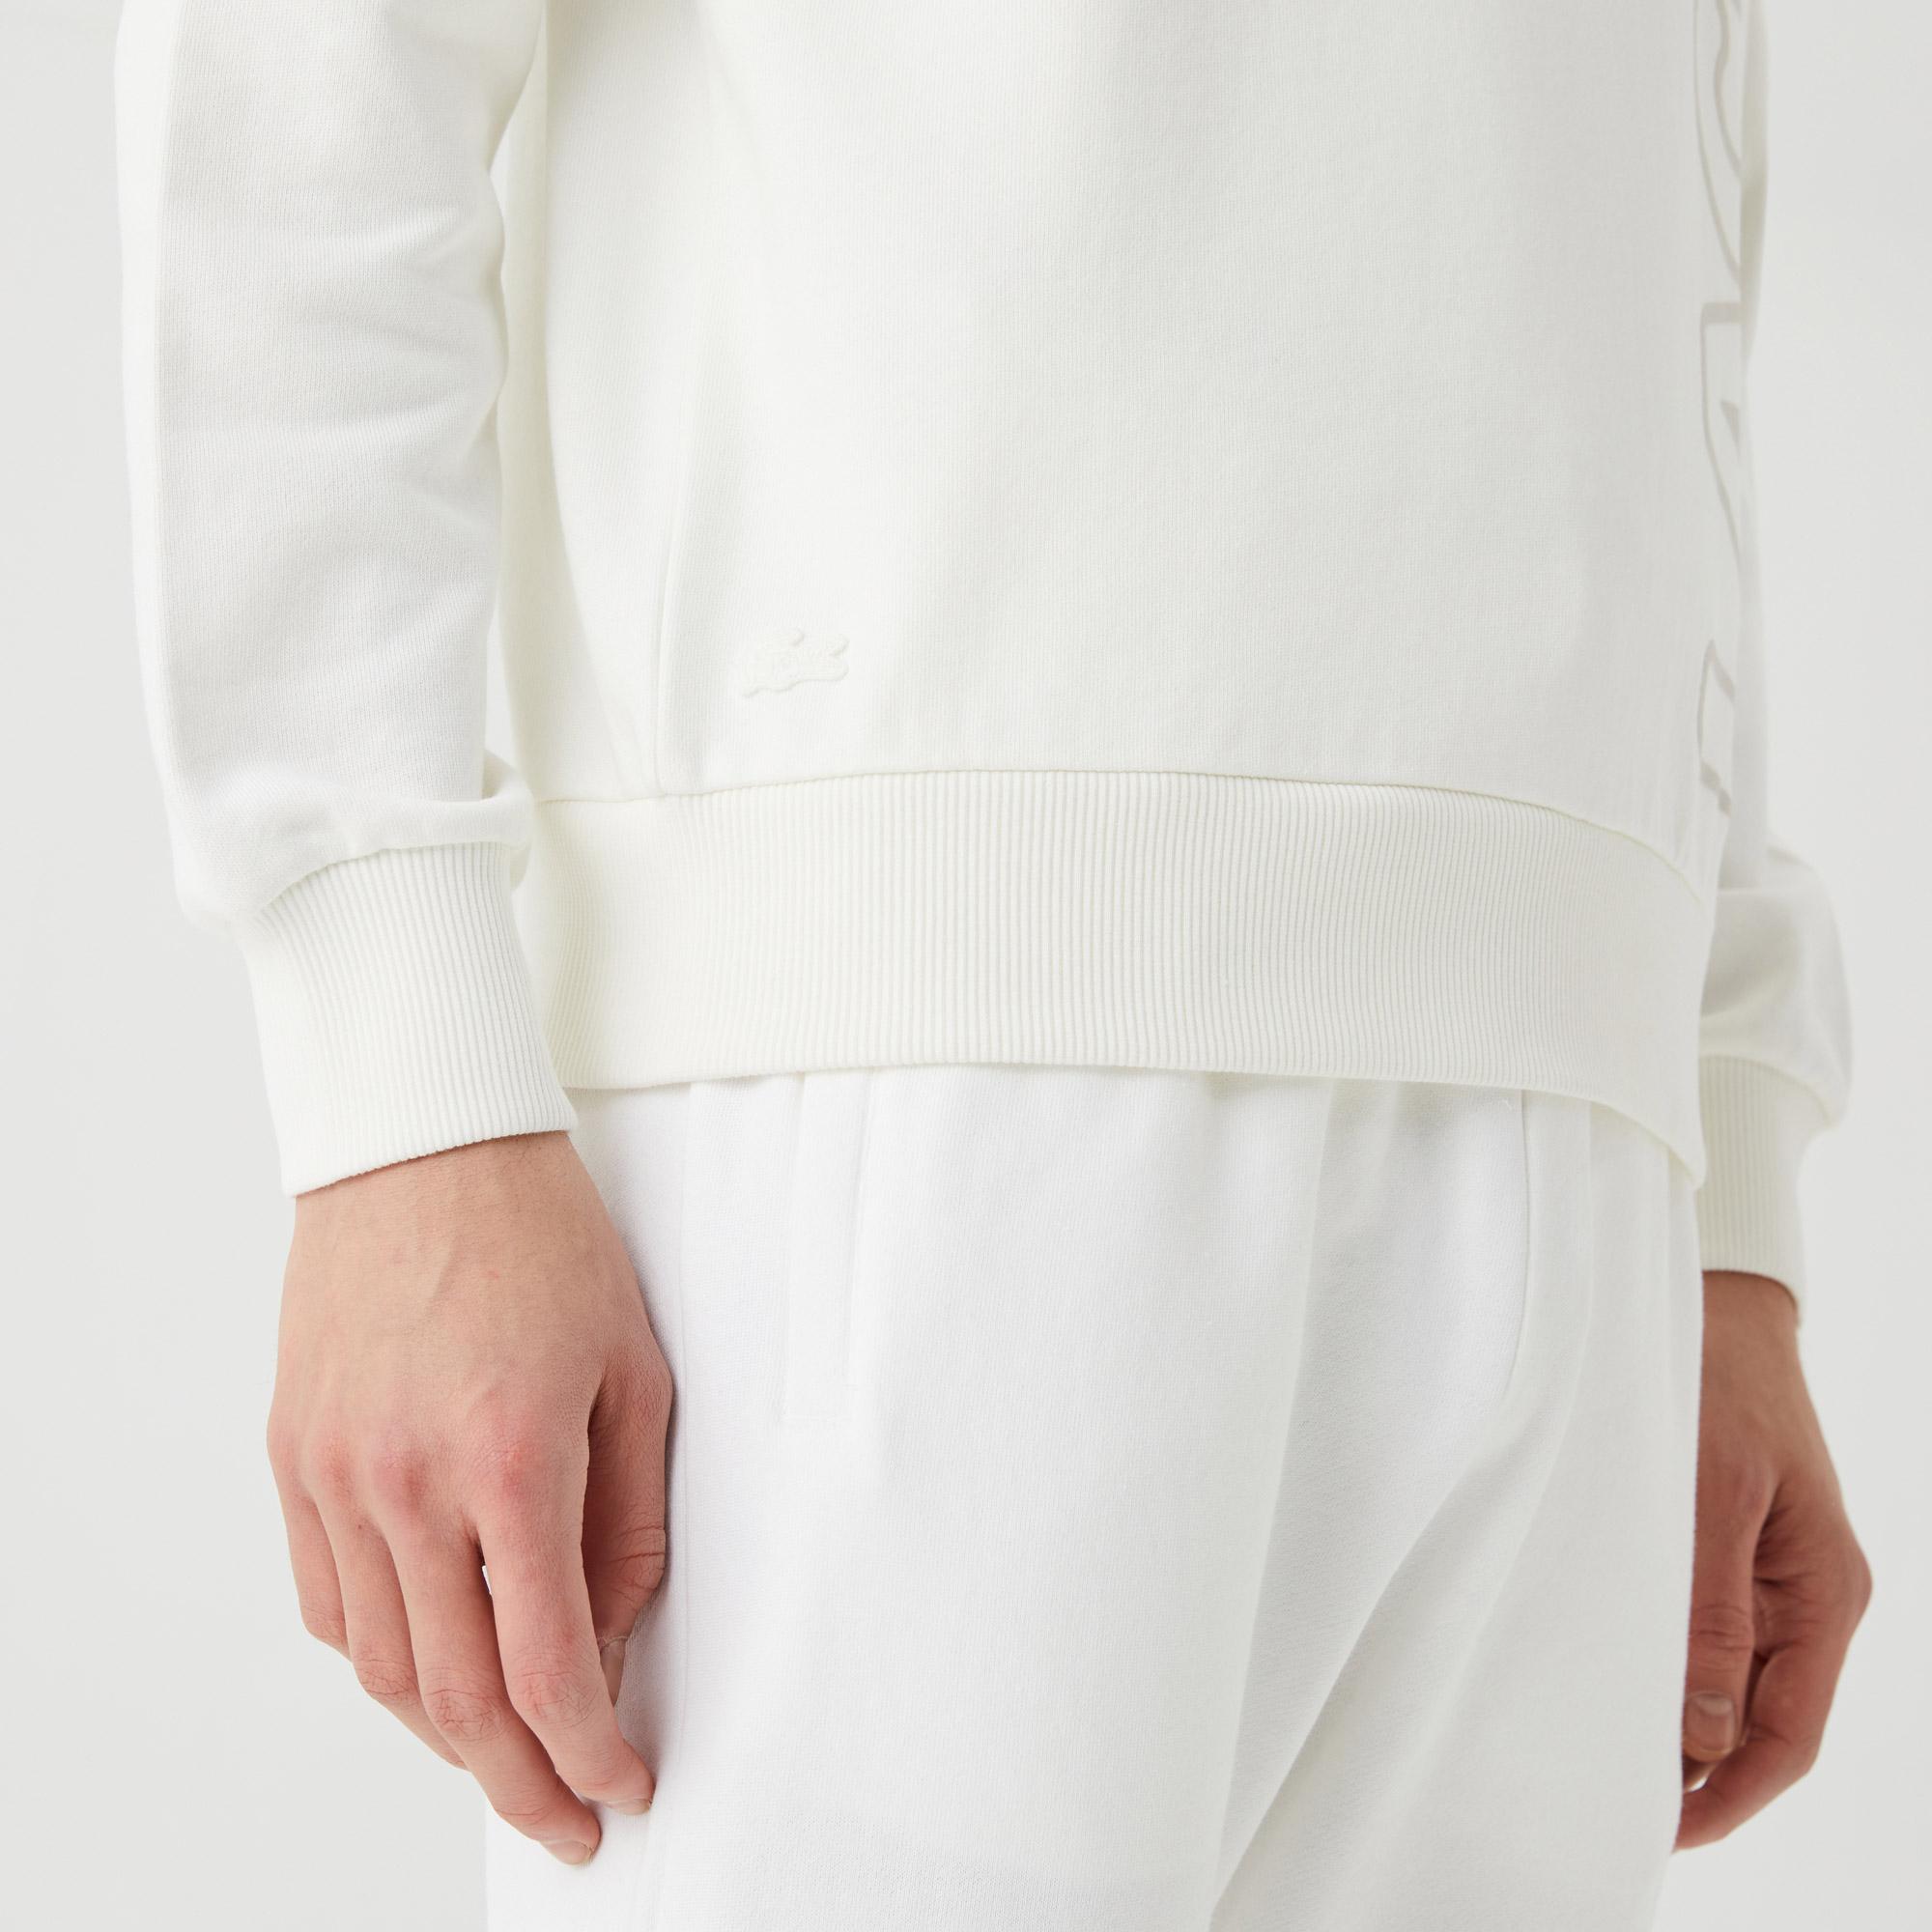 Lacoste Unisex Relaxed Fit Kapüşonlu Baskılı Beyaz Sweatshirt. 6